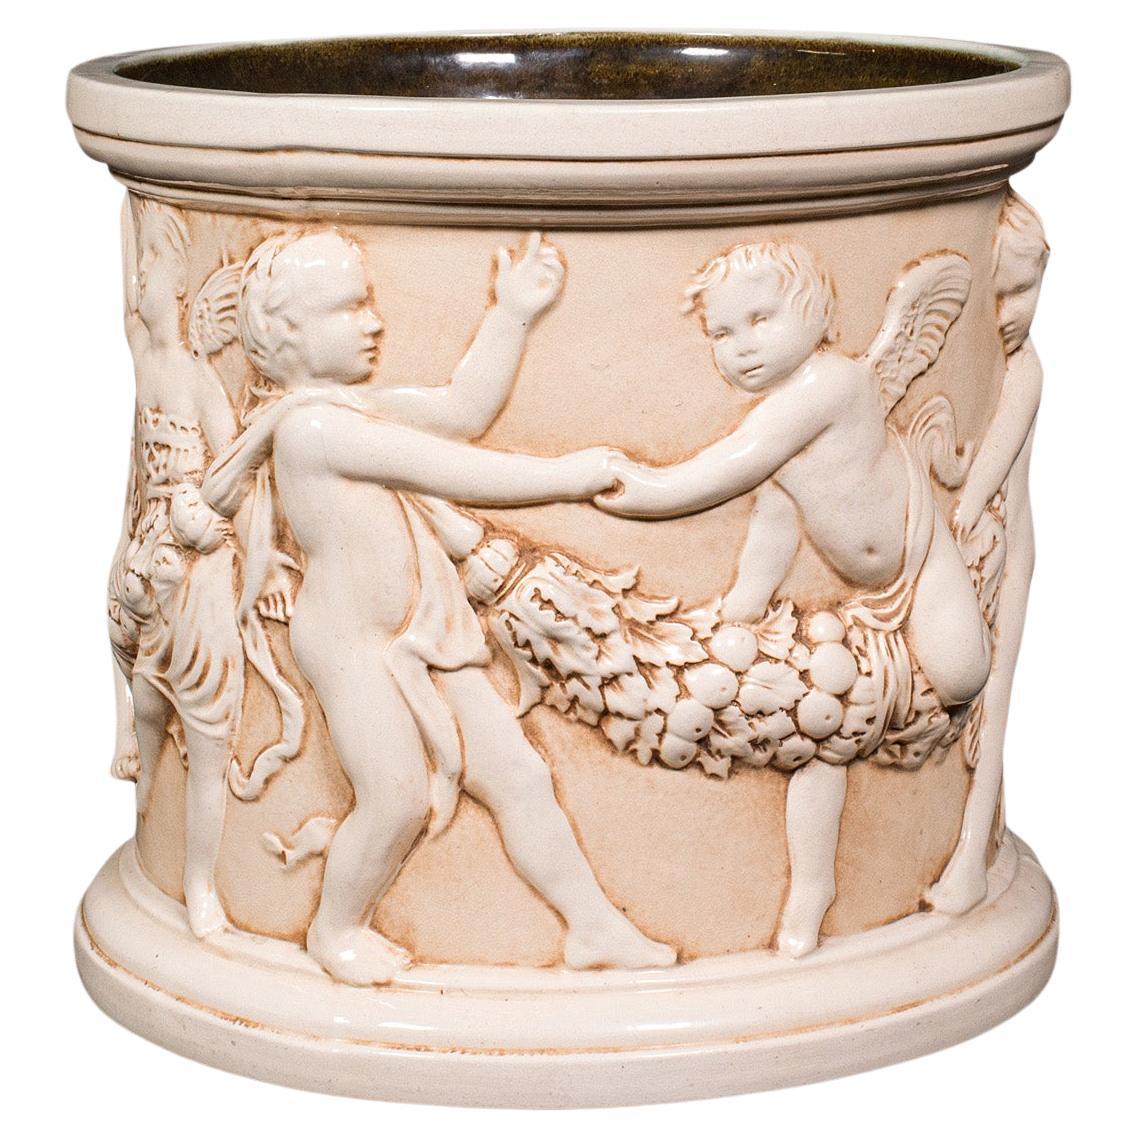 Antique Decorative Cherub Jardiniere, English, Ceramic Planter, Putti, Edwardian